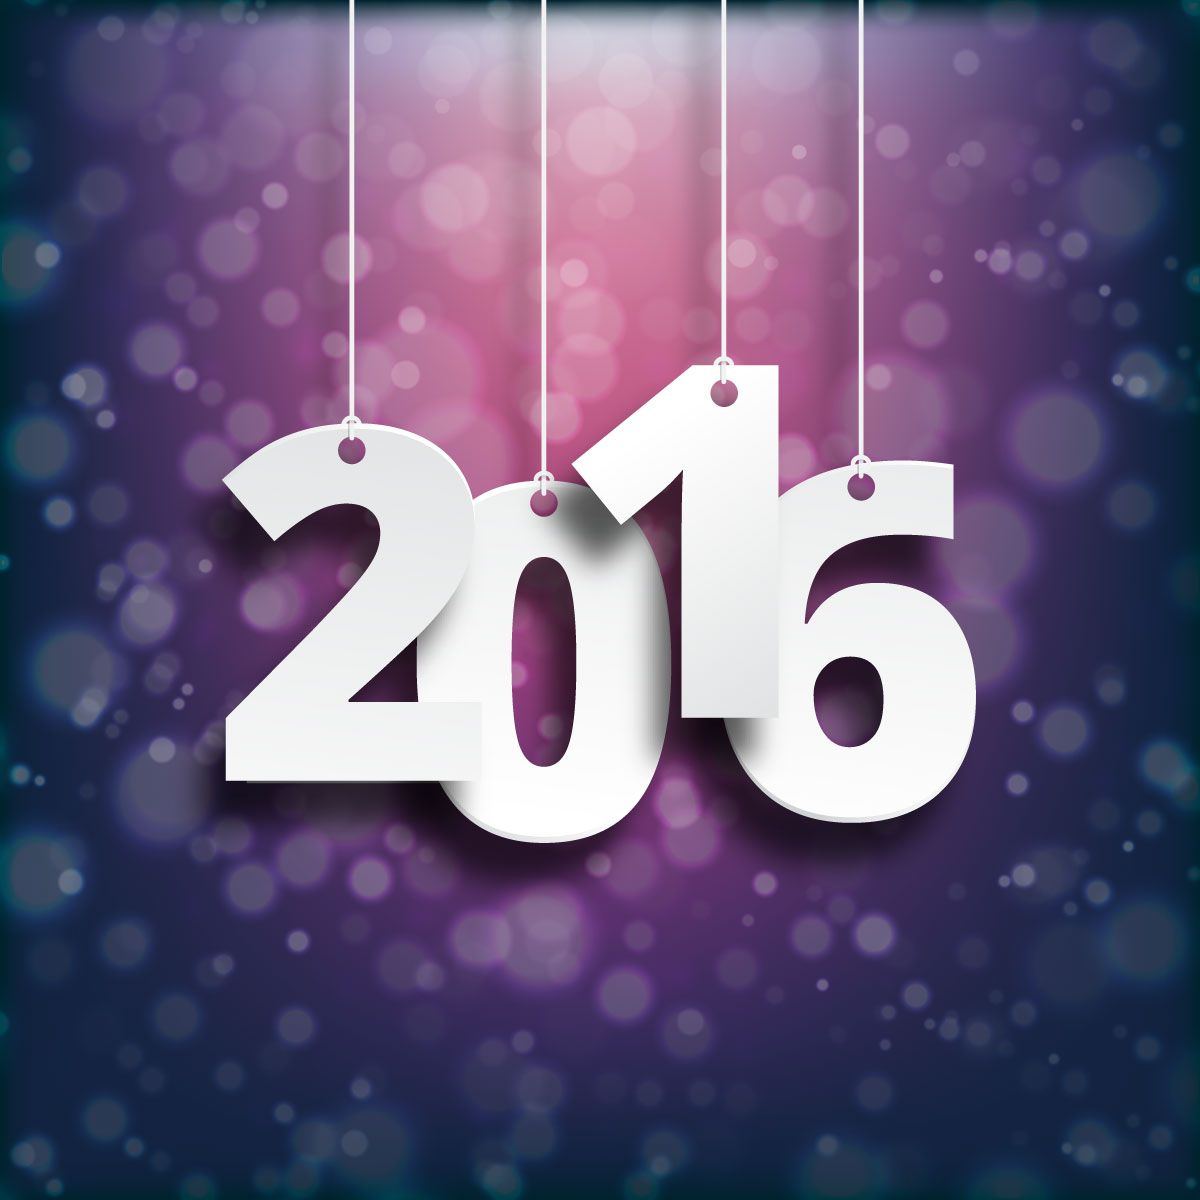 Feliz Ano Novo - Objectivos para 2016